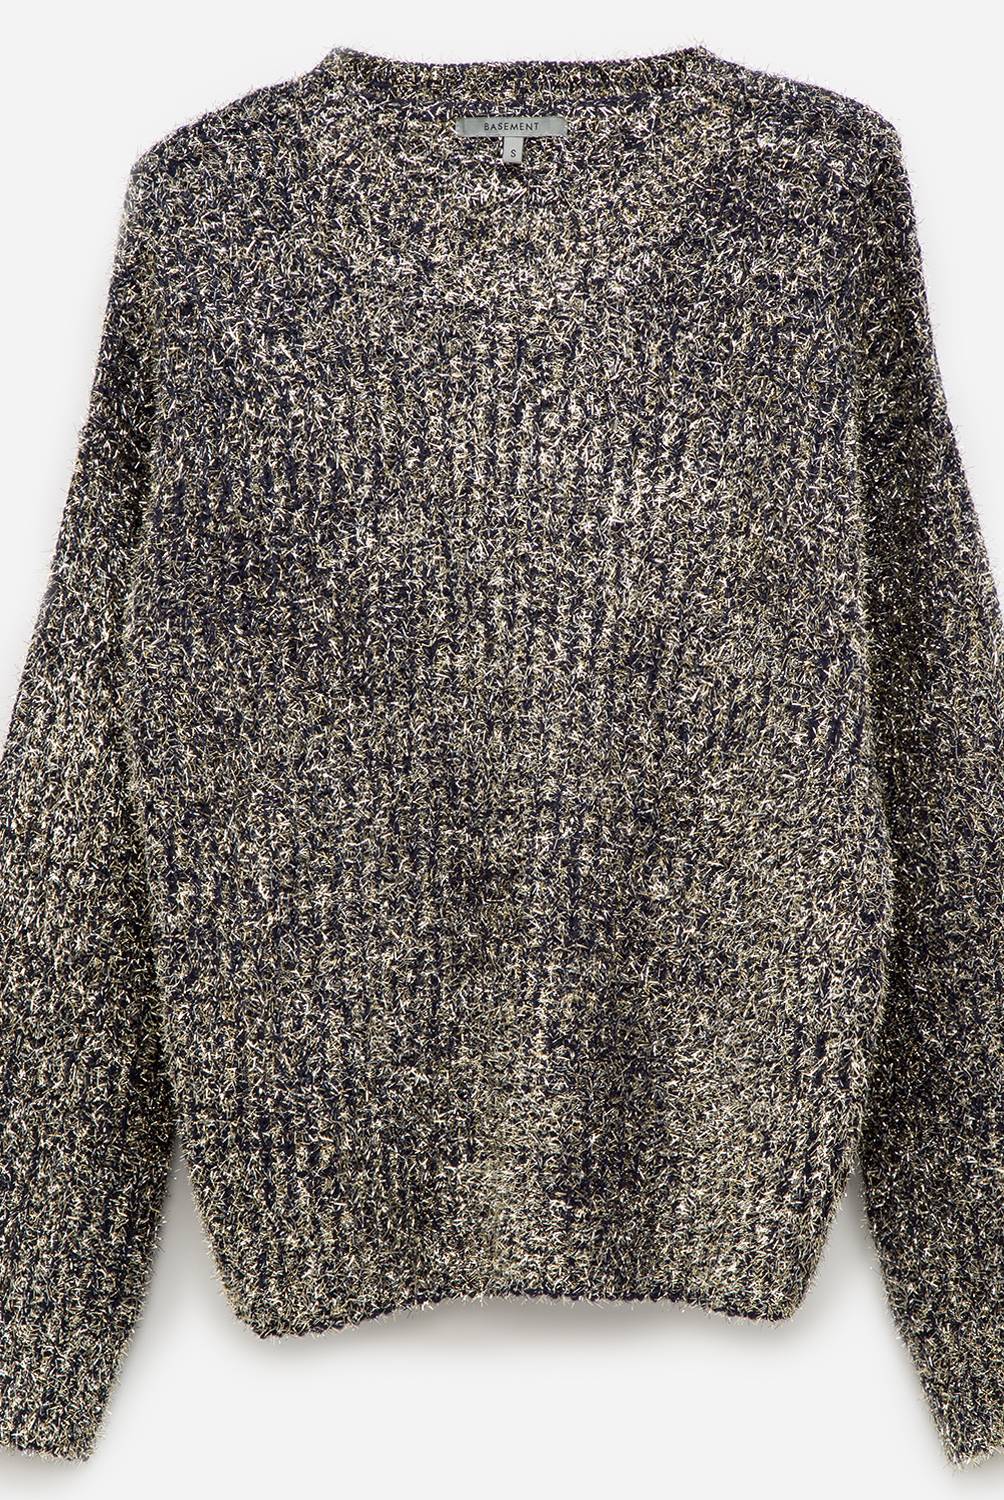 BASEMENT - Sweater